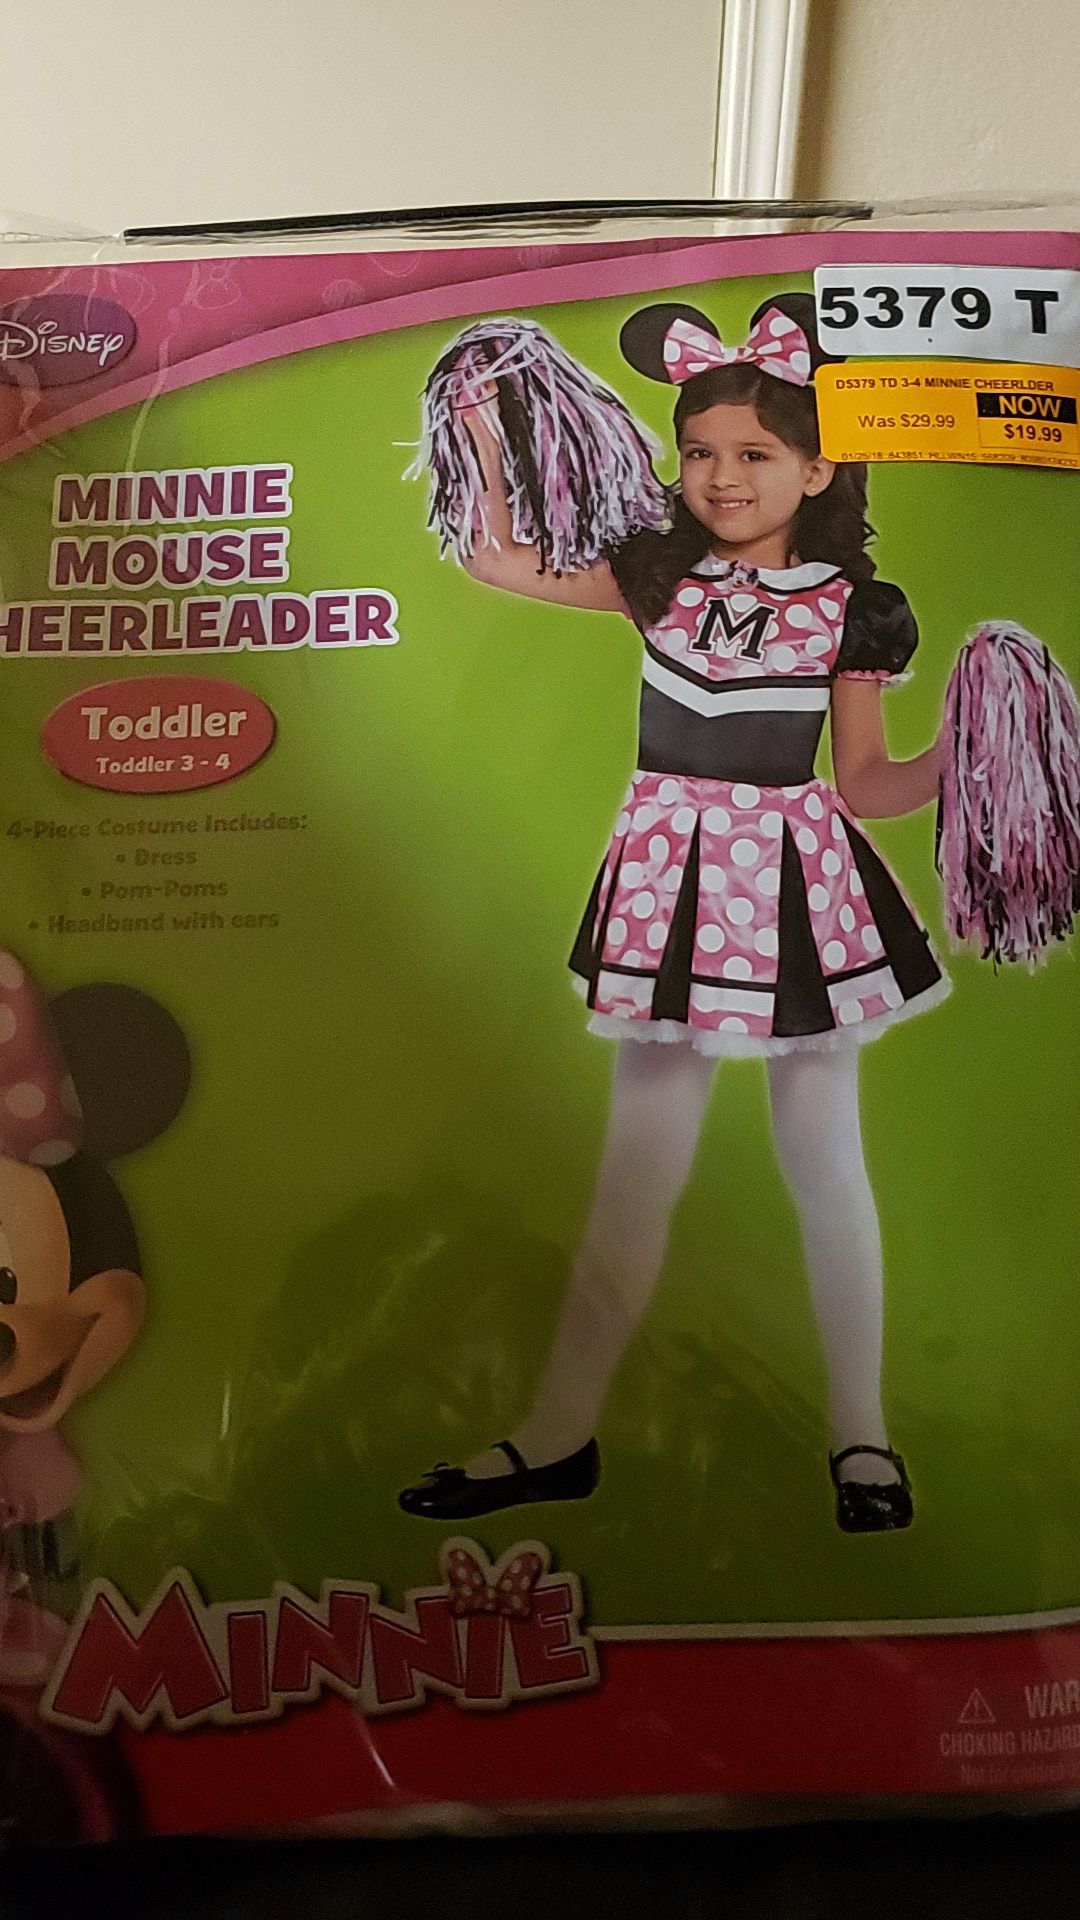 Minnie mouse cheerleader